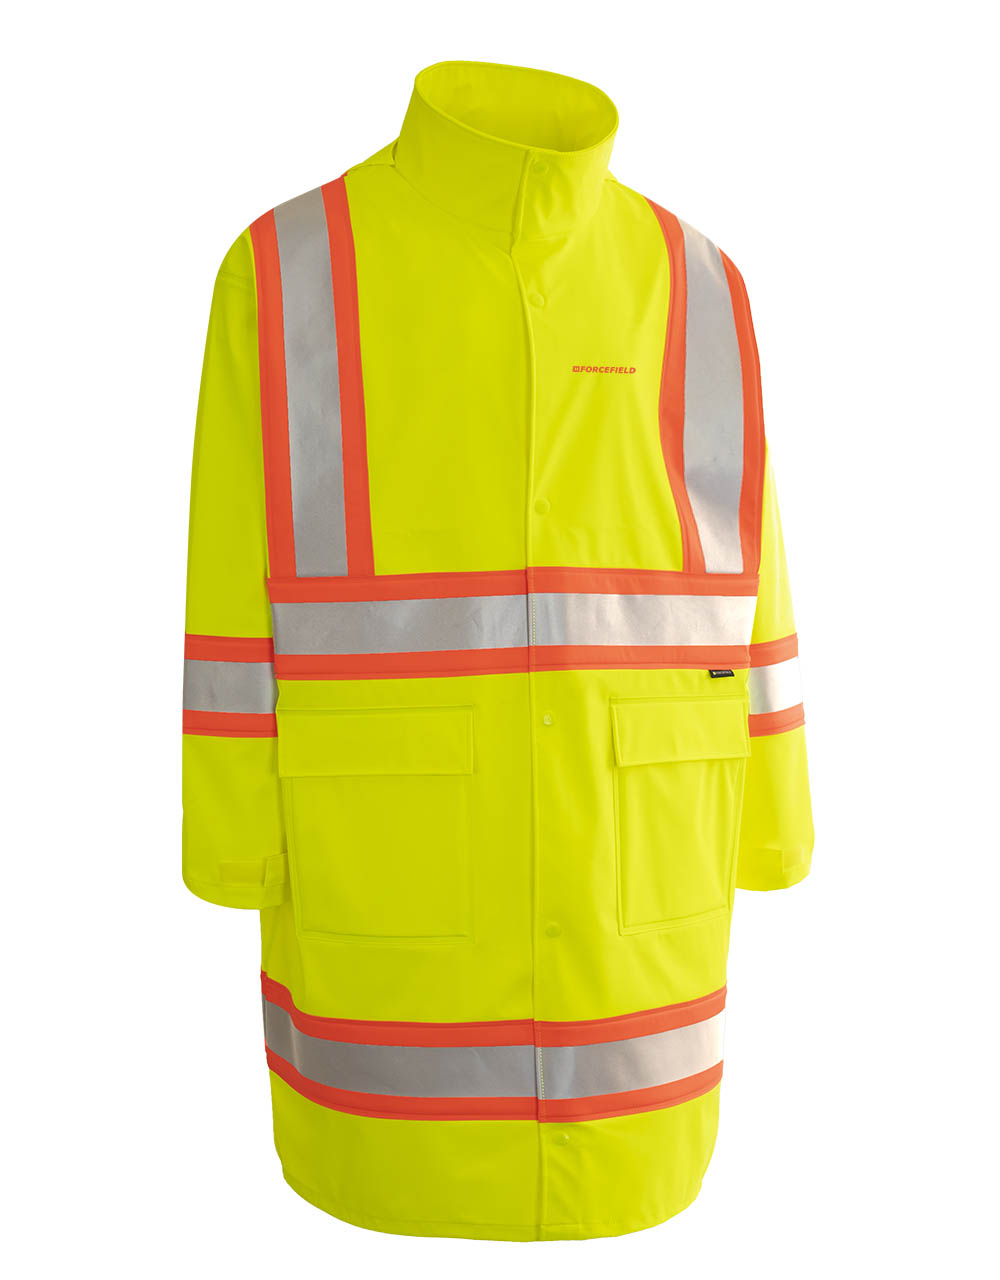 Fire Resistant 3/4 Length Rain Coat